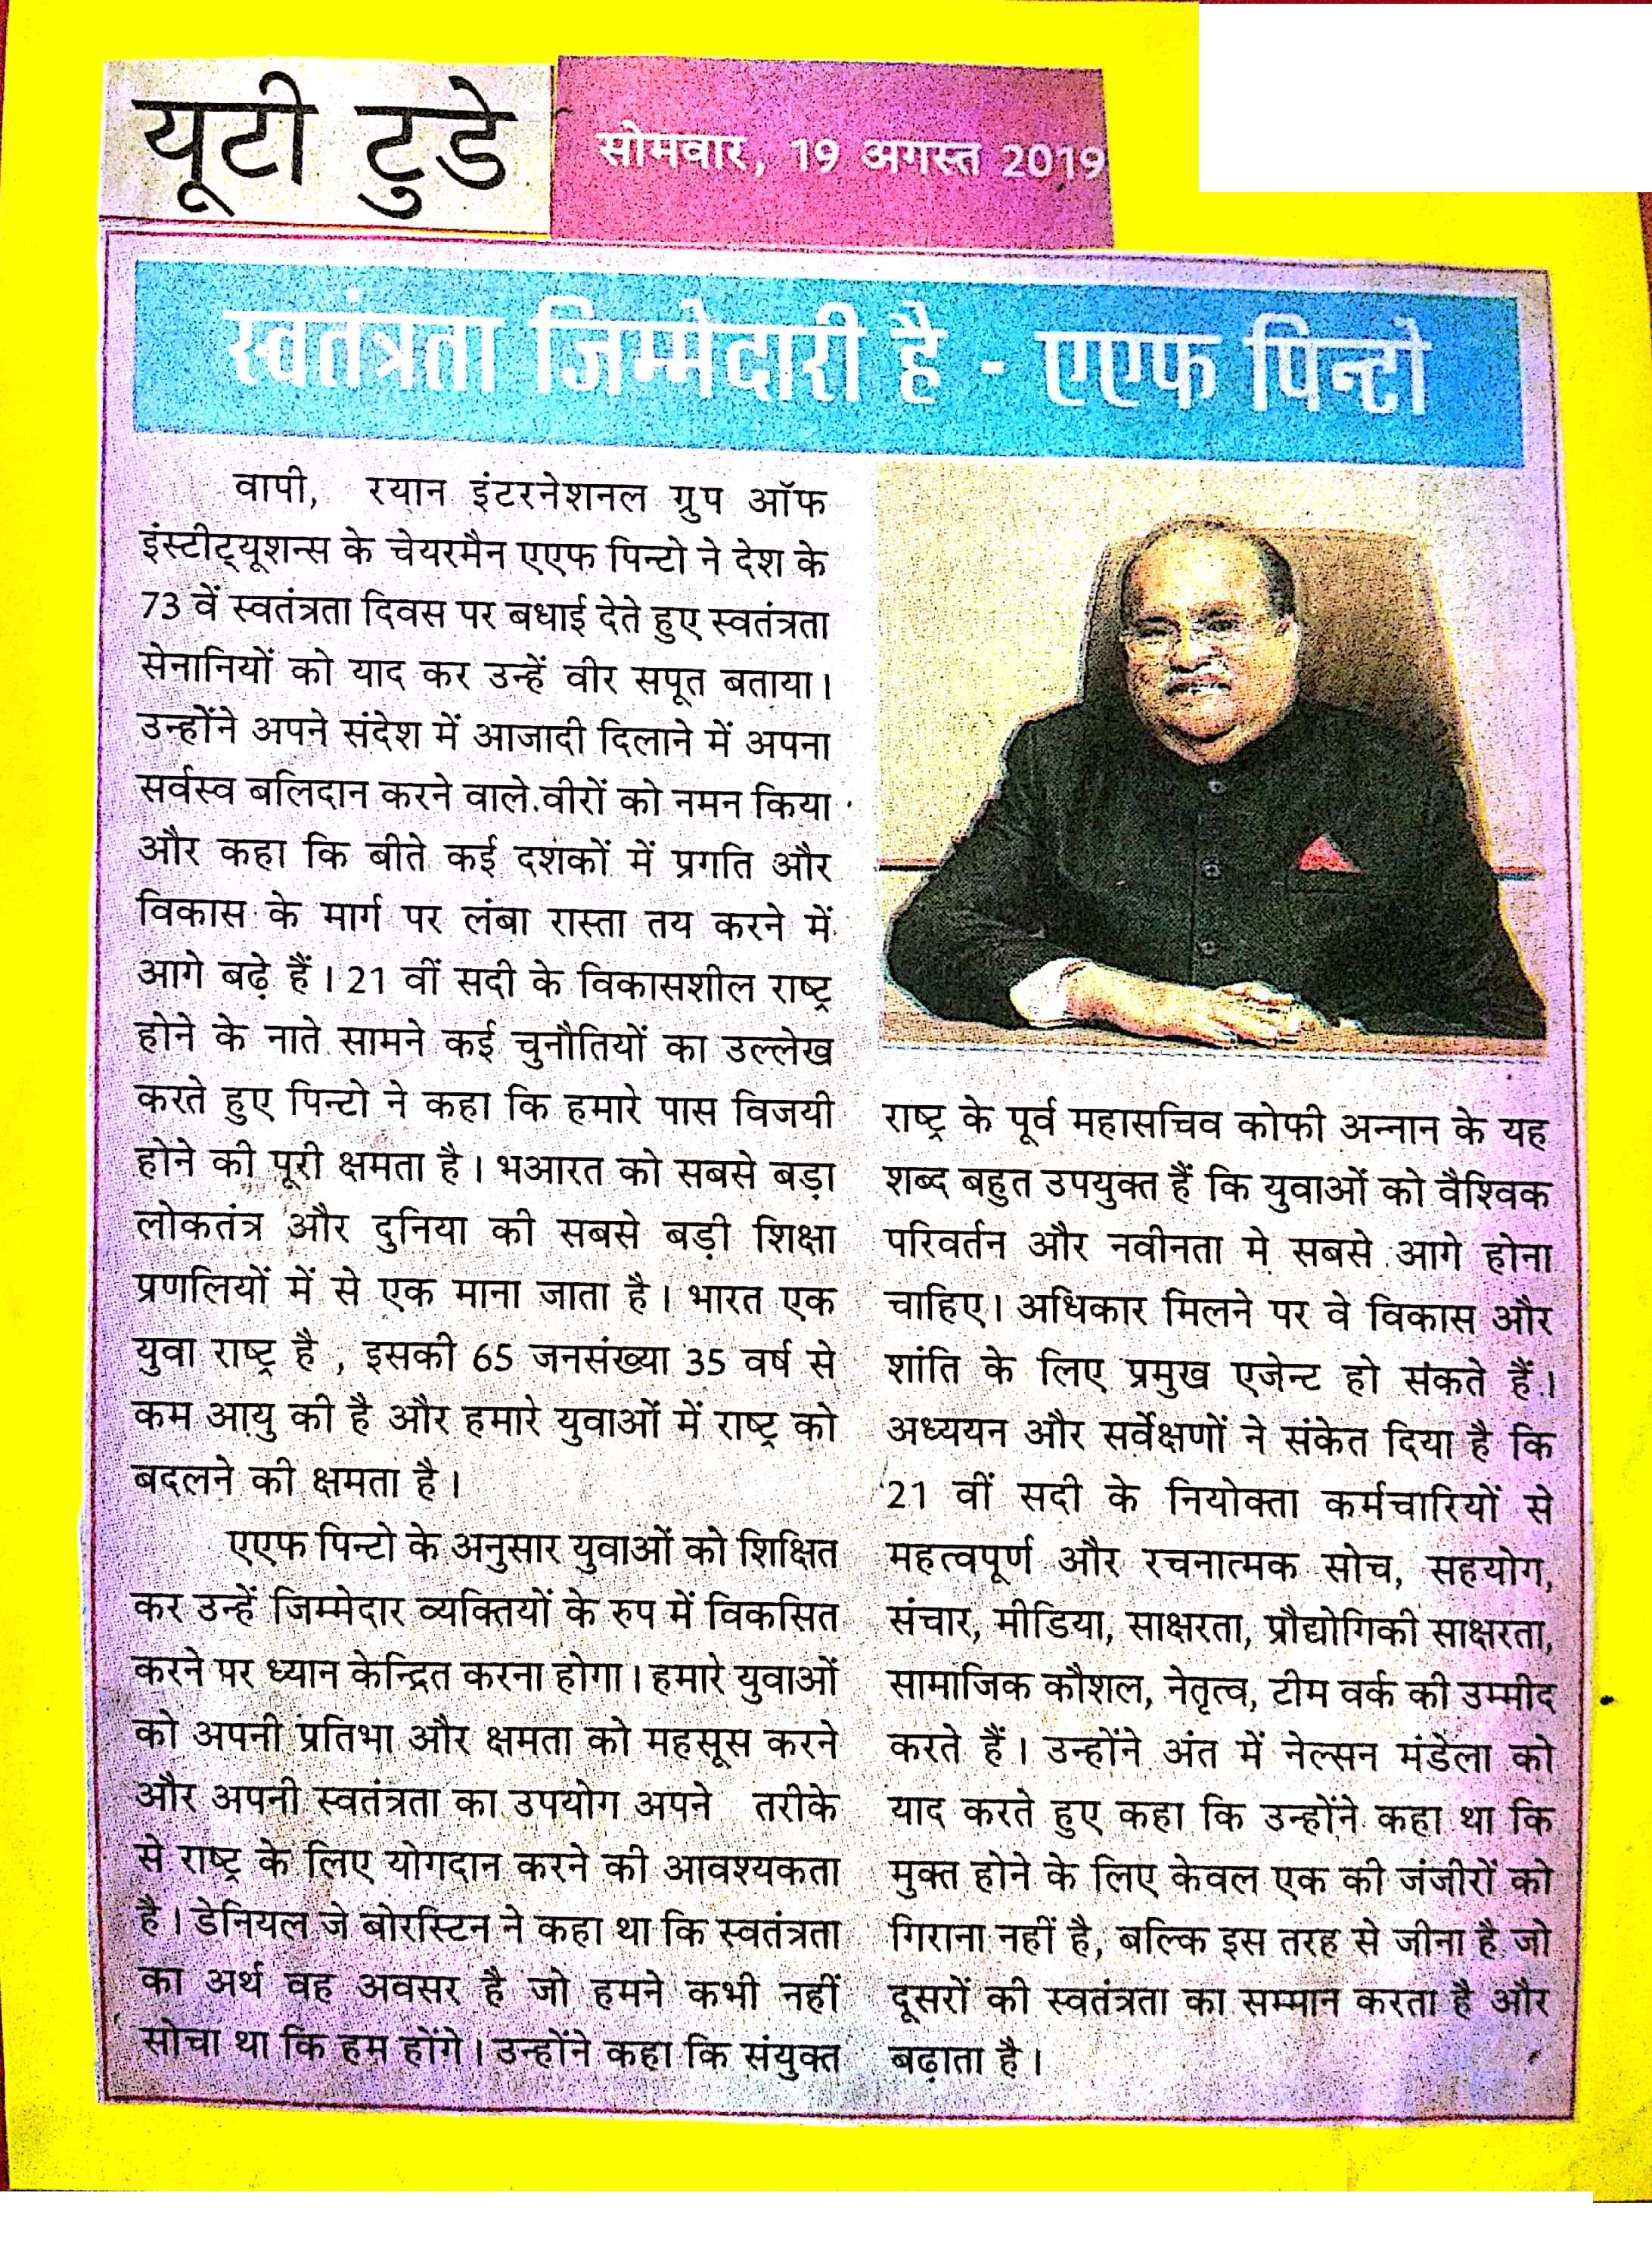 Chairman Sir’s Article On Christmas Was Featured In Valsad Sandesh - Ryan International School, Vapi